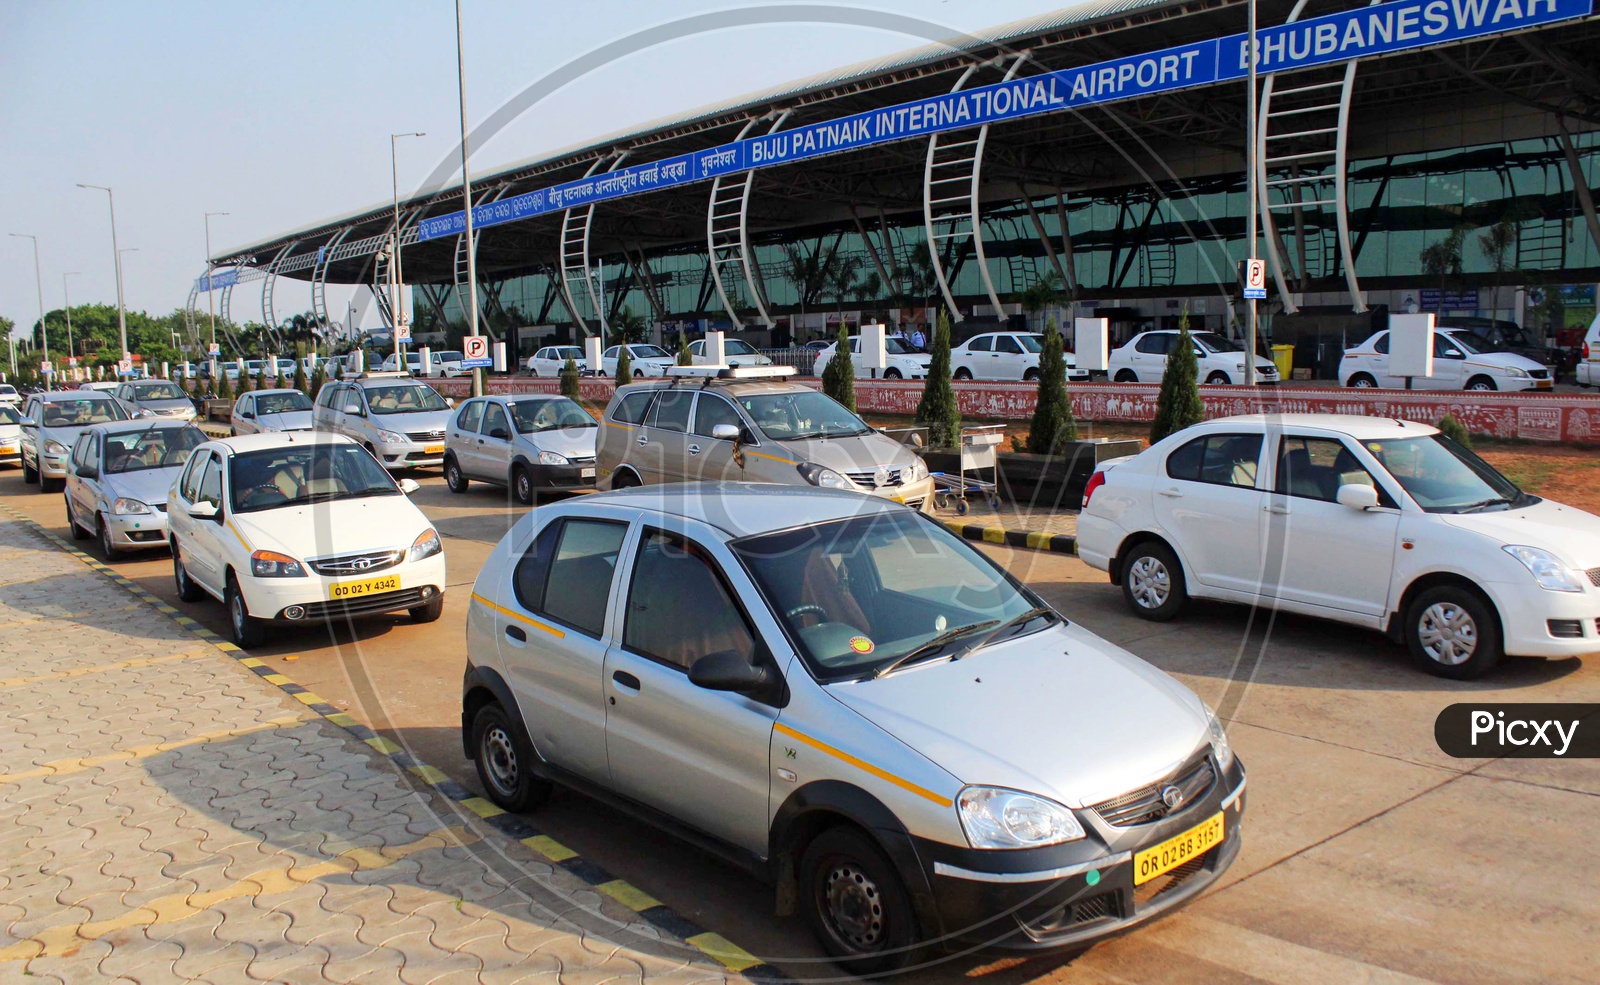 Bhubaneswar International Airport